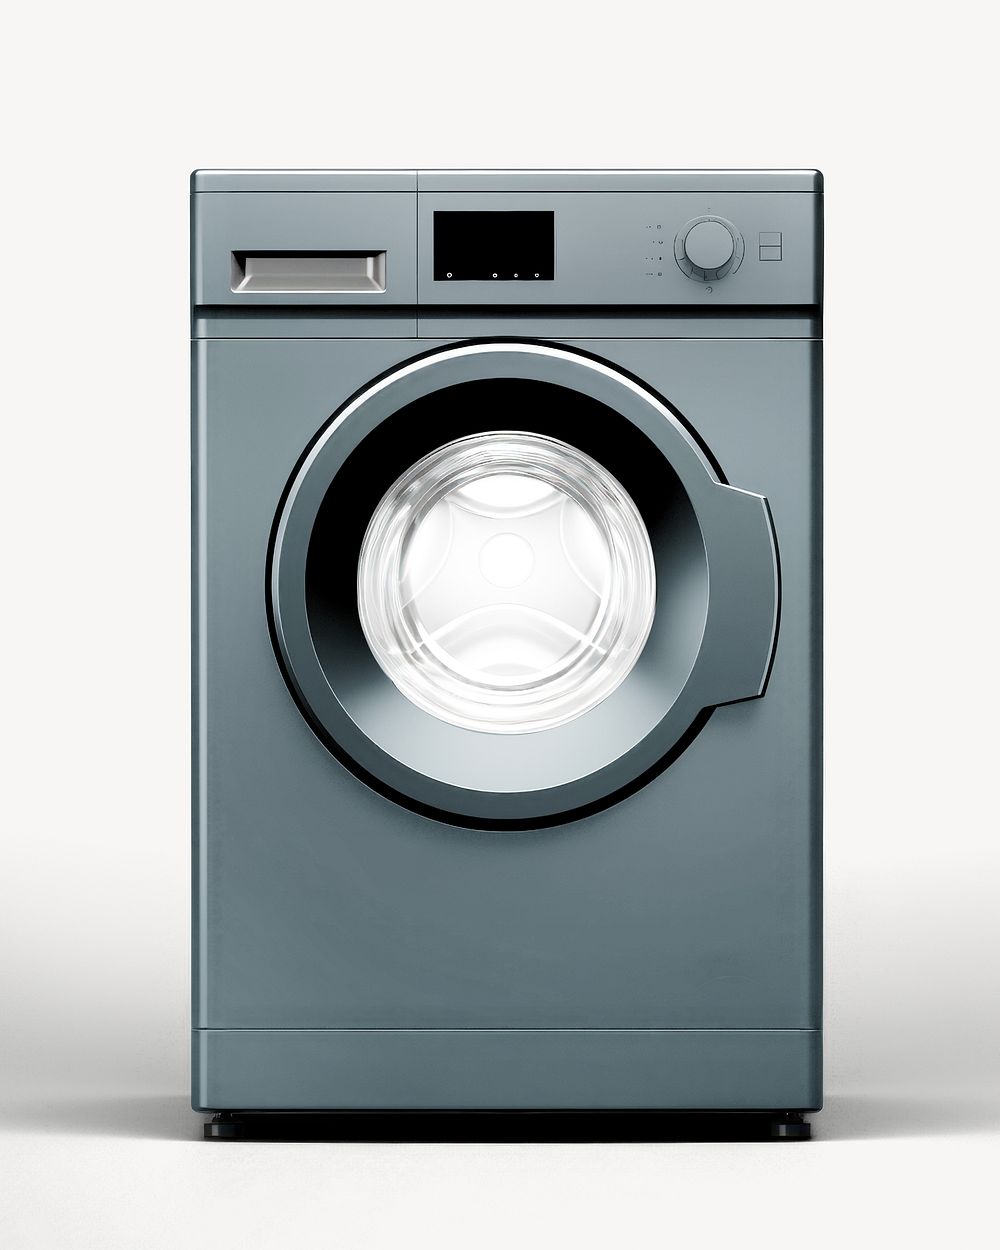 Washing machine, home appliance